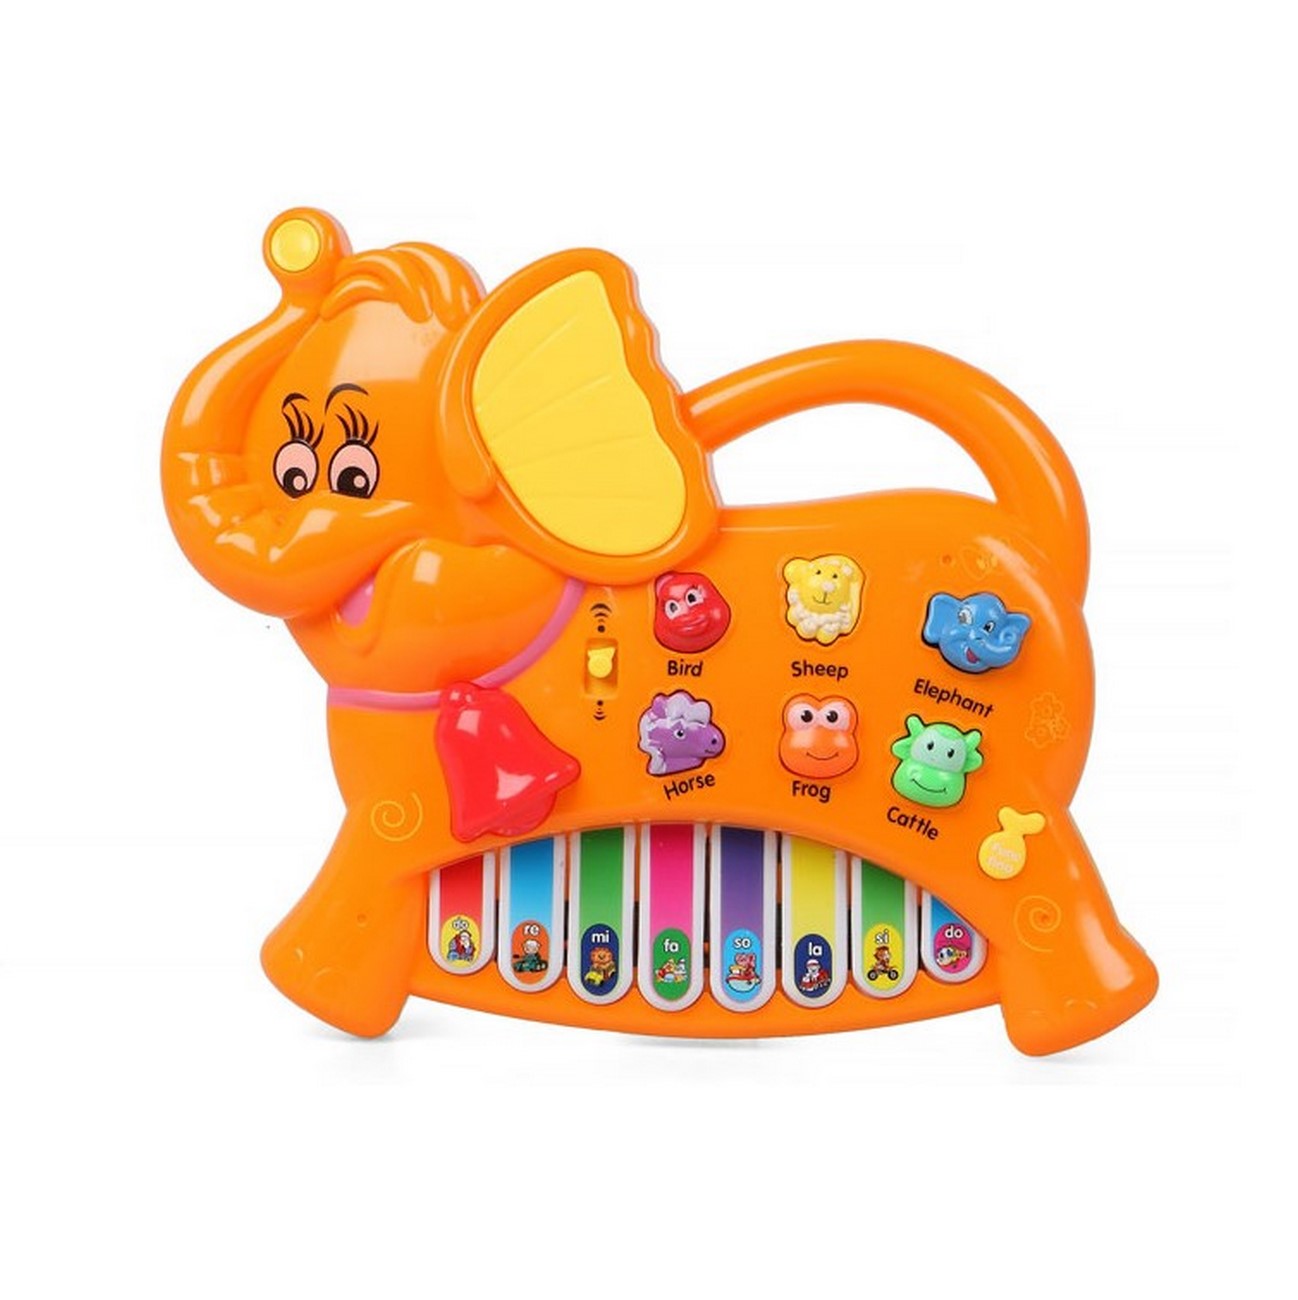 Piano Organeta Elefante Animales Musical Bebes Niño +bateria